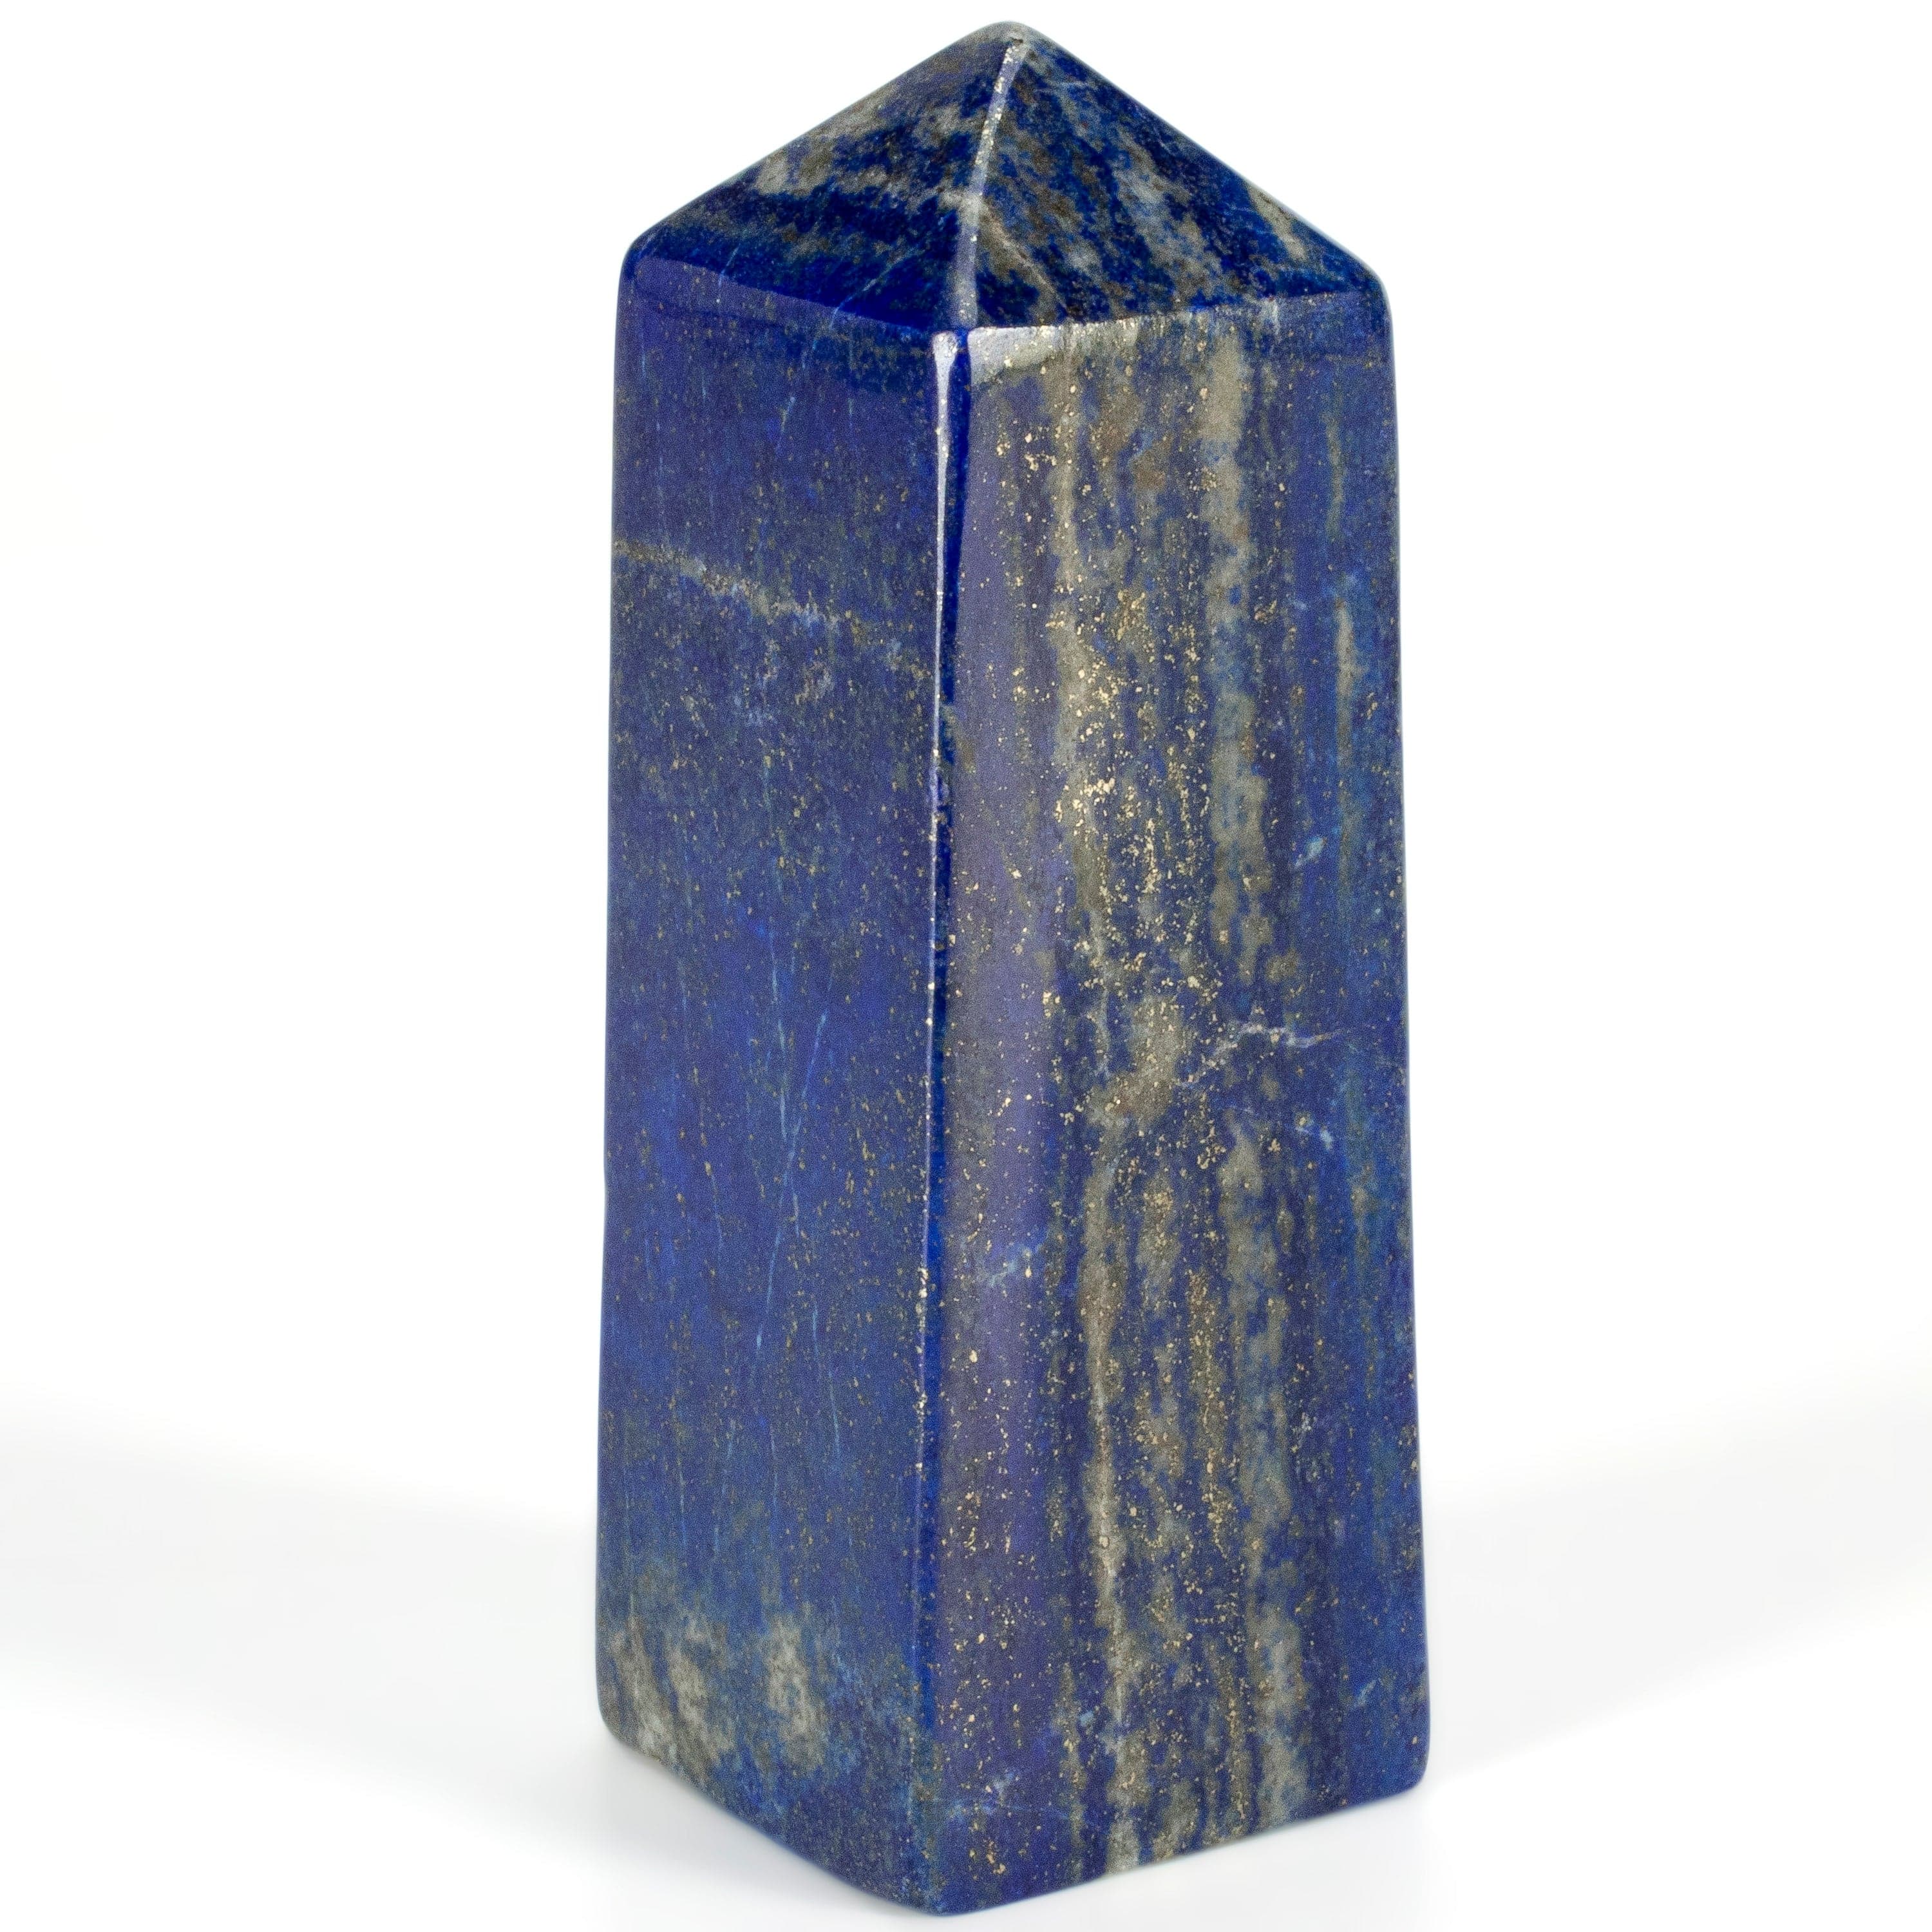 Kalifano Lapis Lapis Lazuli Polished Obelisk from Afghanistan - 4" / 285 grams LPOB600.004